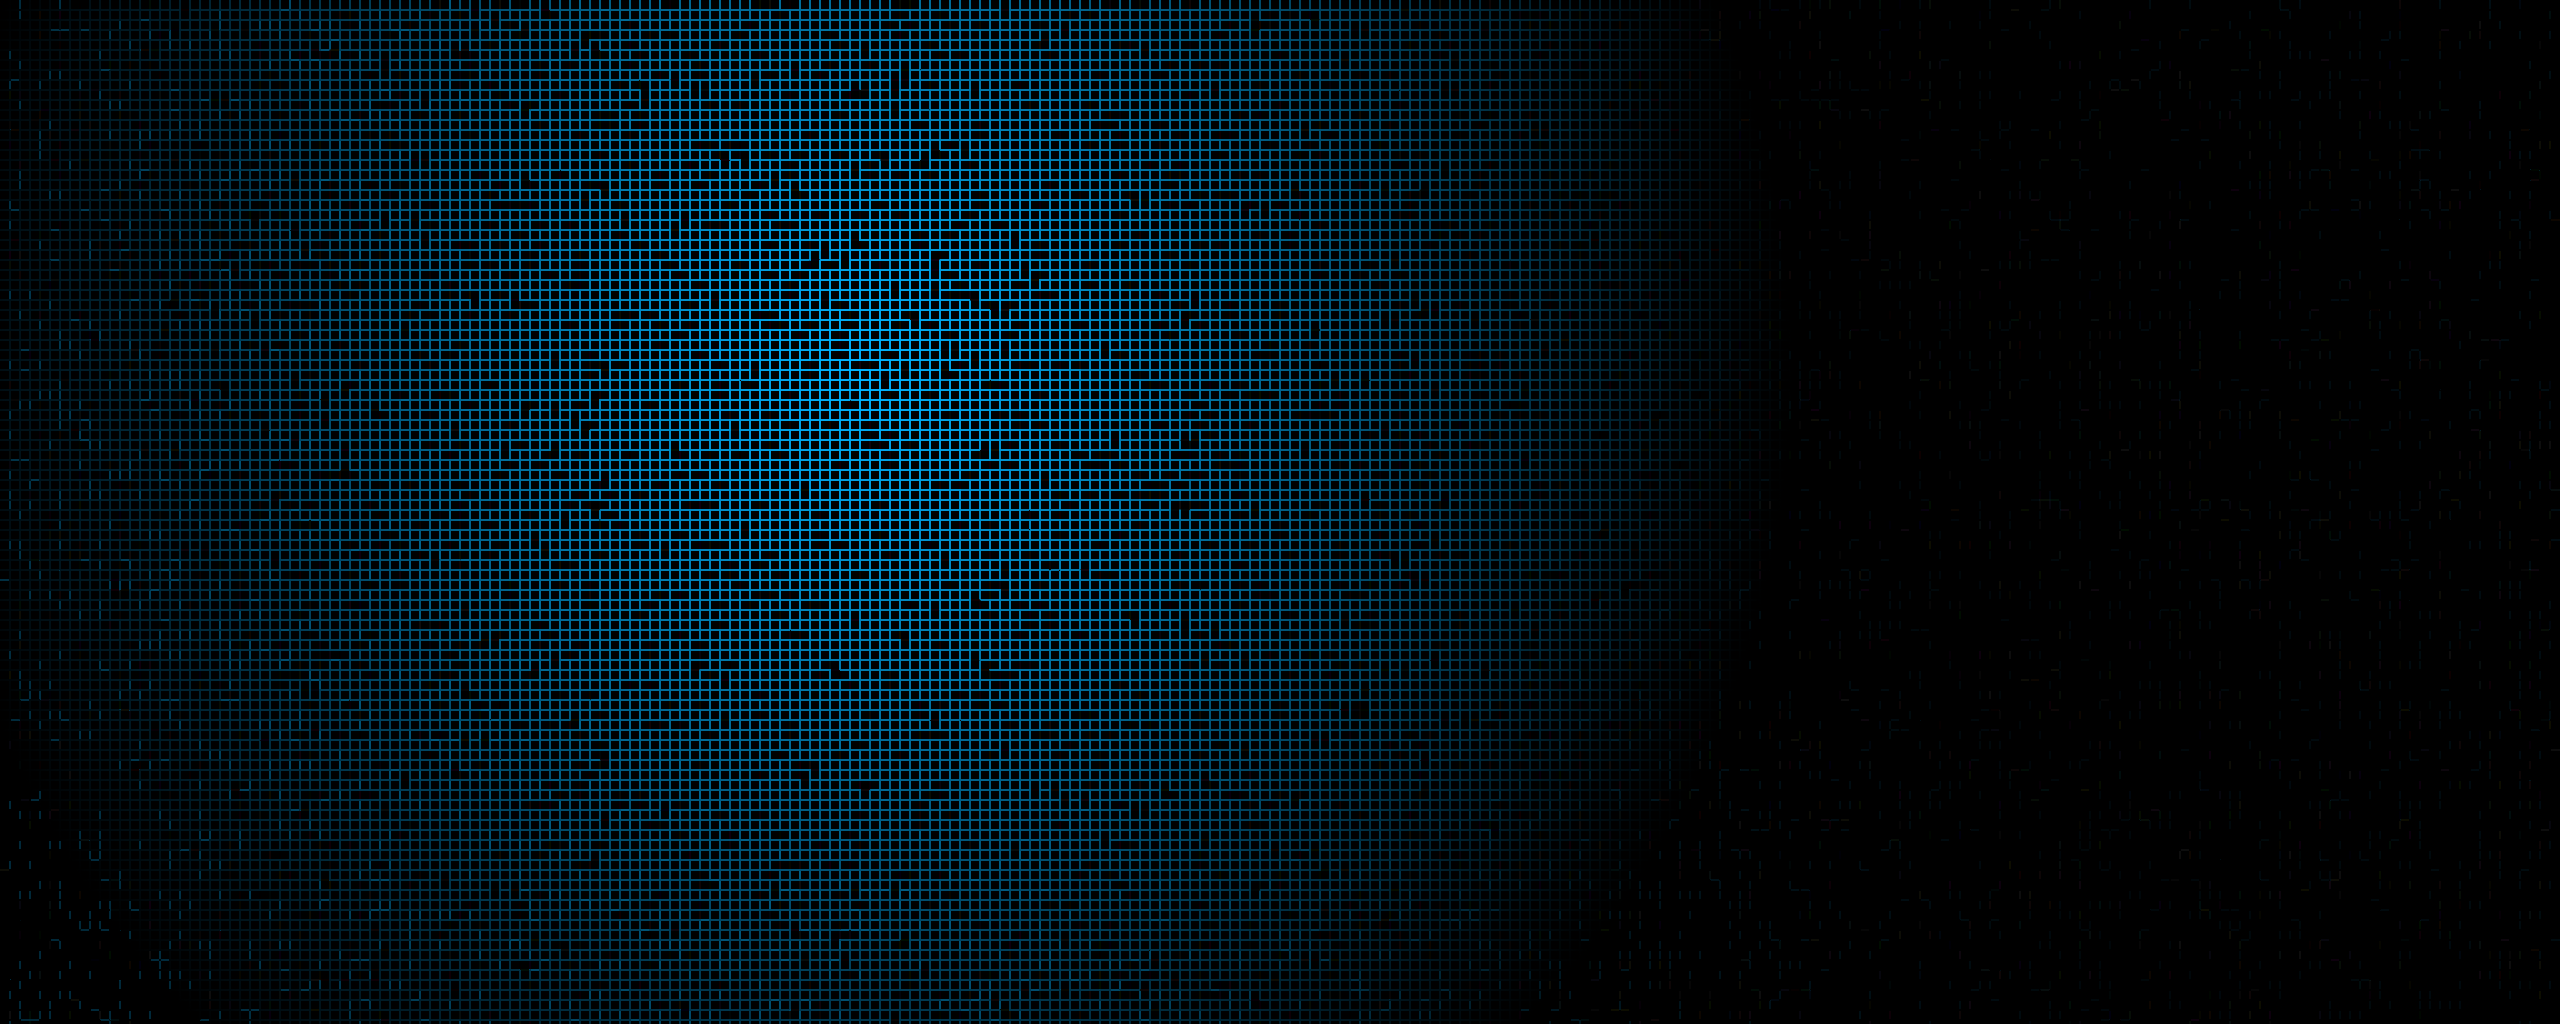 Blue Black Blocks Square large resolution wallpaper background